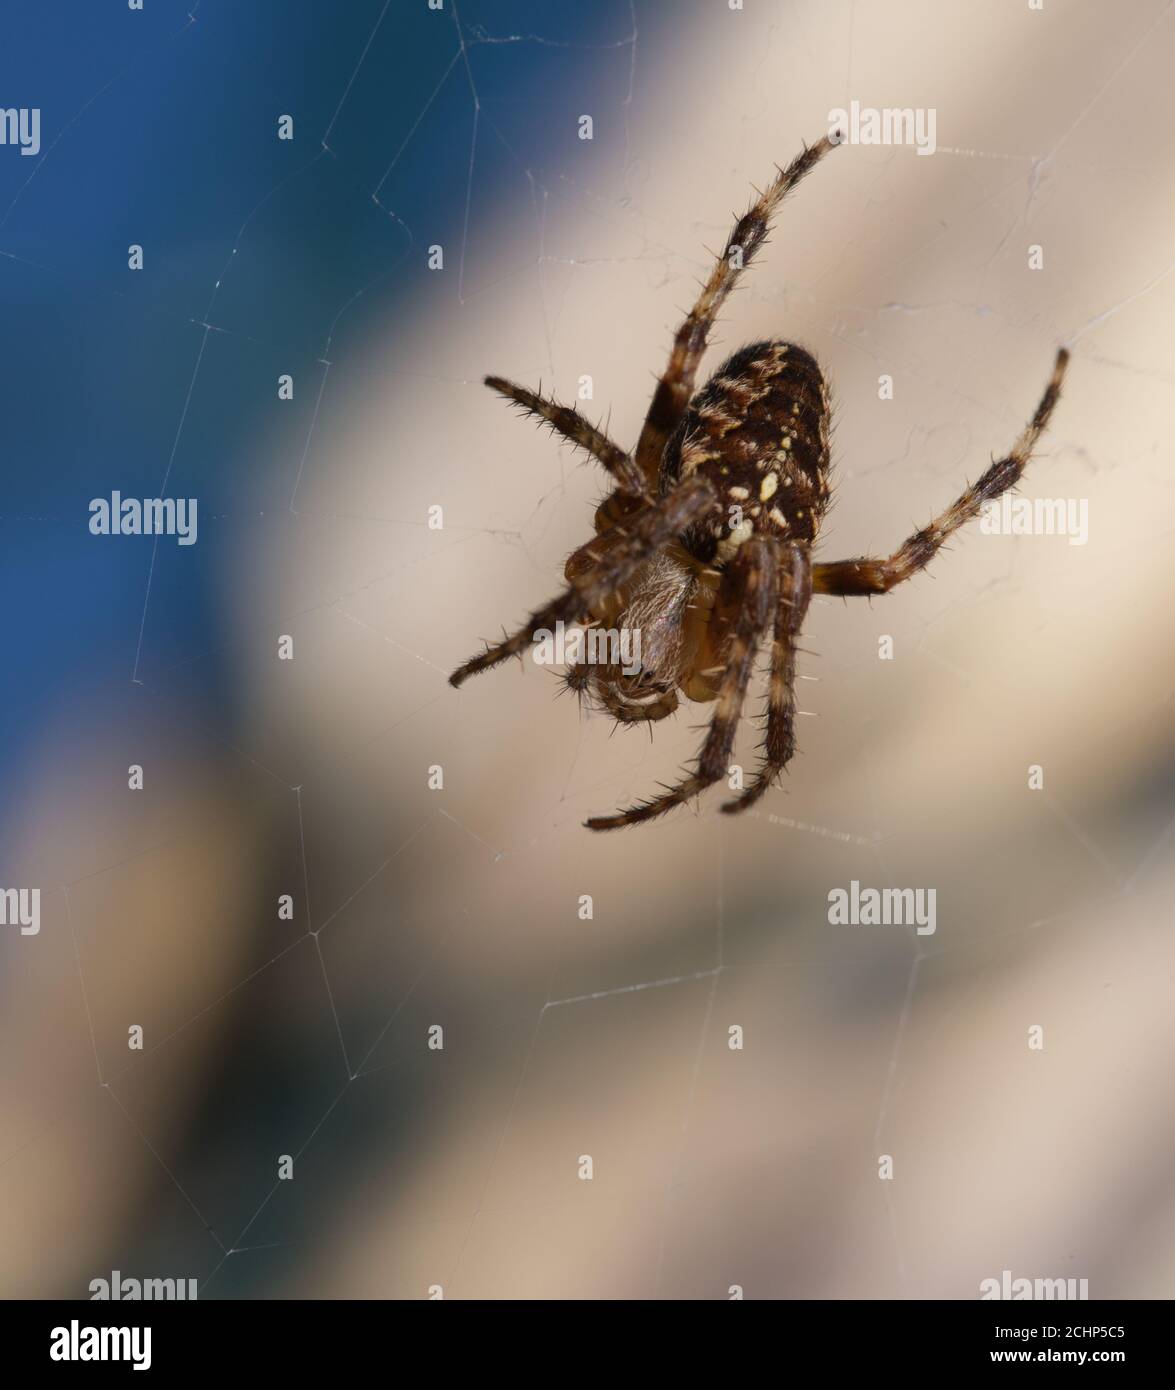 Garden spider close up in macro Stock Photo